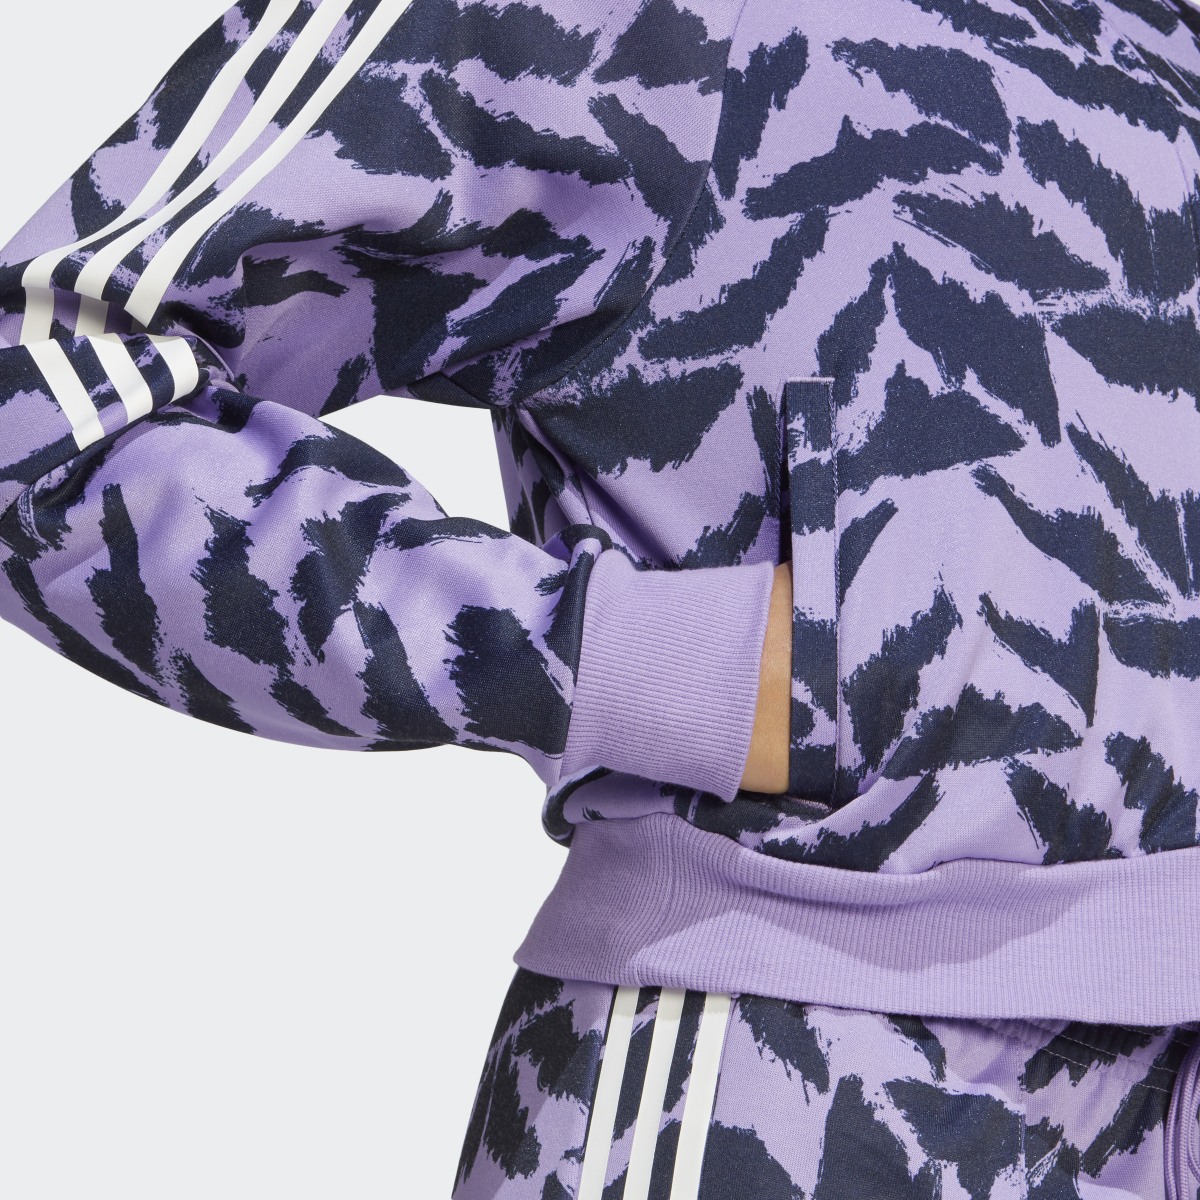 Adidas Tiro Suit Up Lifestyle Track Top. 8